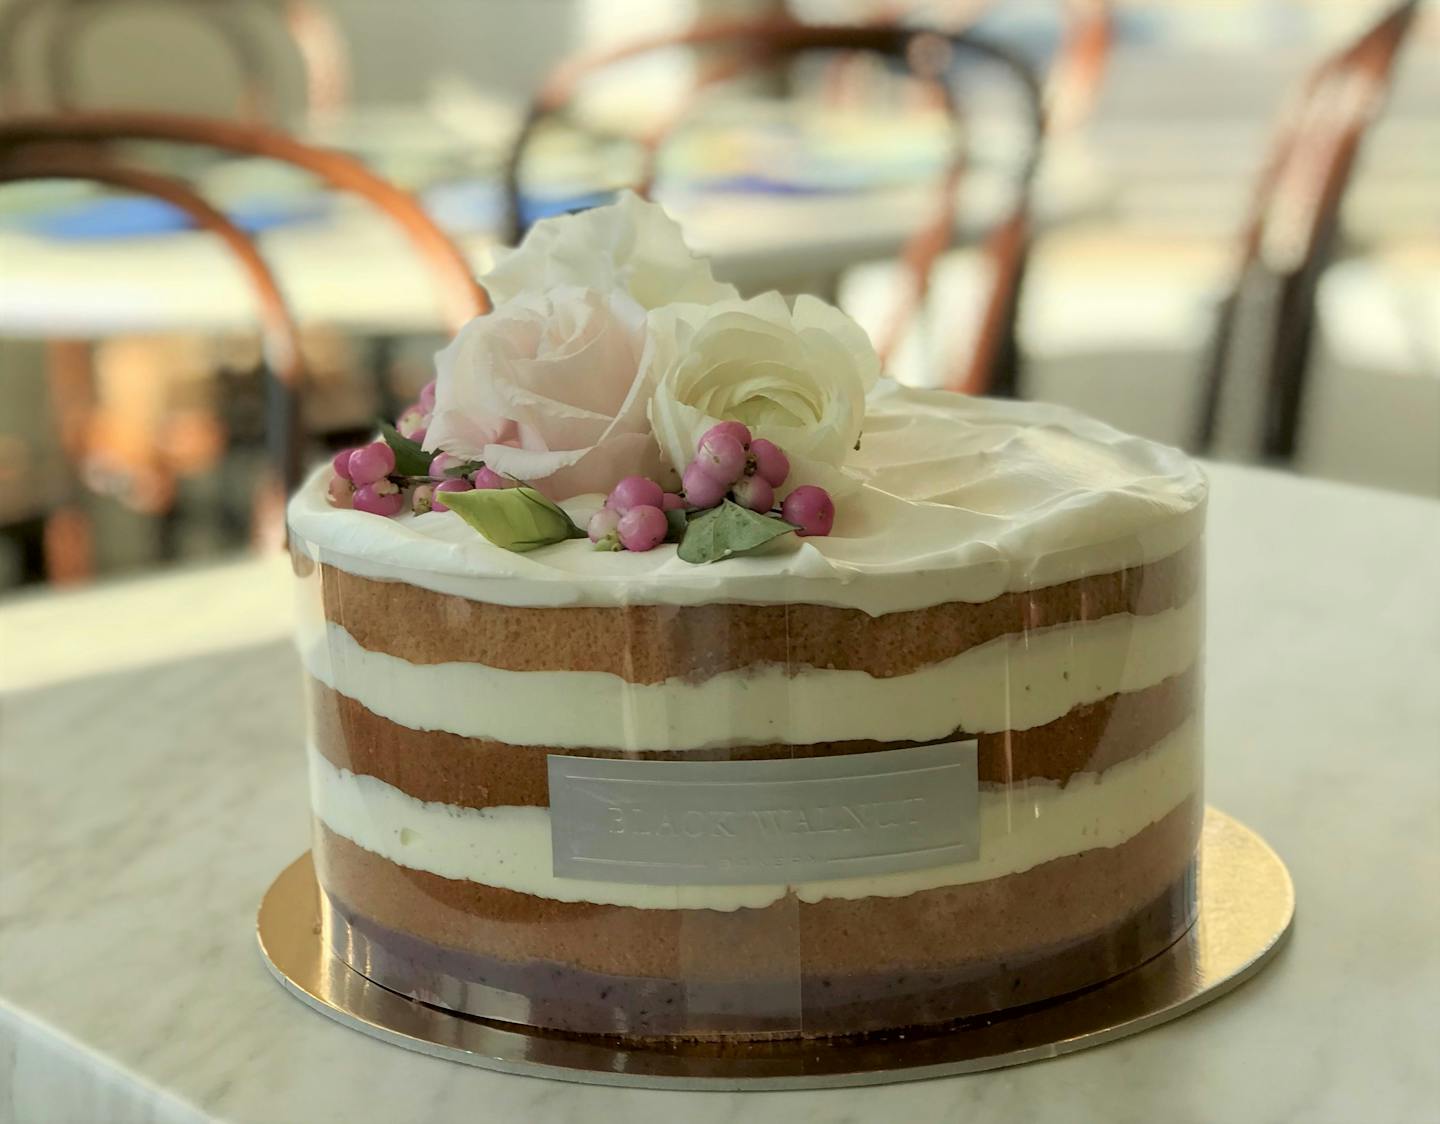 Minneapolis-St. Paul bakeries offer New Orleans-style King Cake